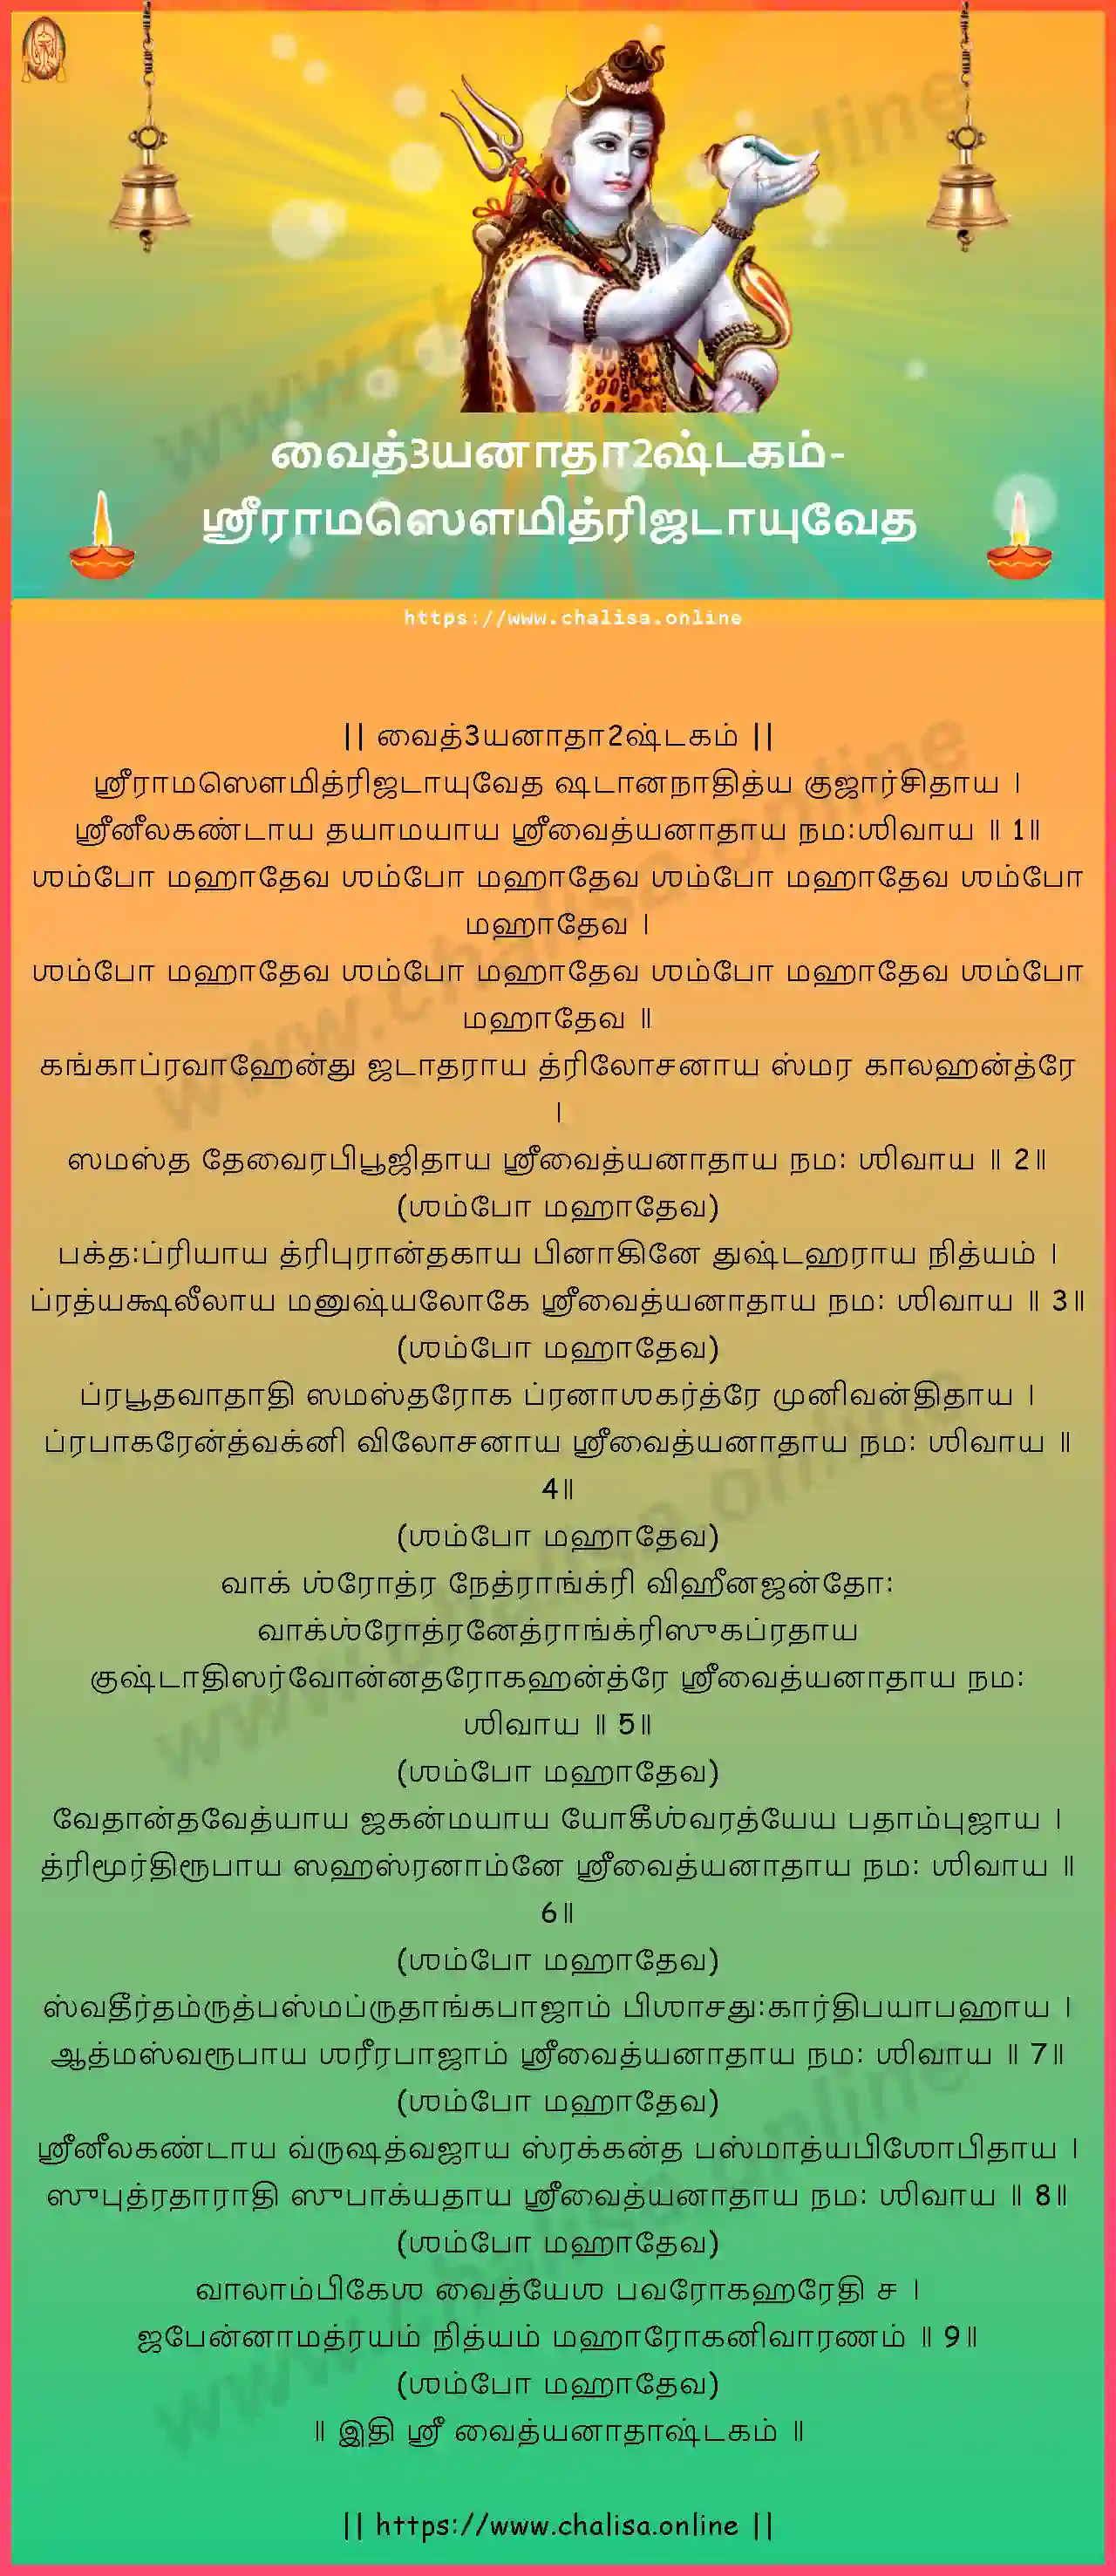 sriramasaumitrijatayuveda-vaidyanatha-ashtakam-tamil-tamil-lyrics-download